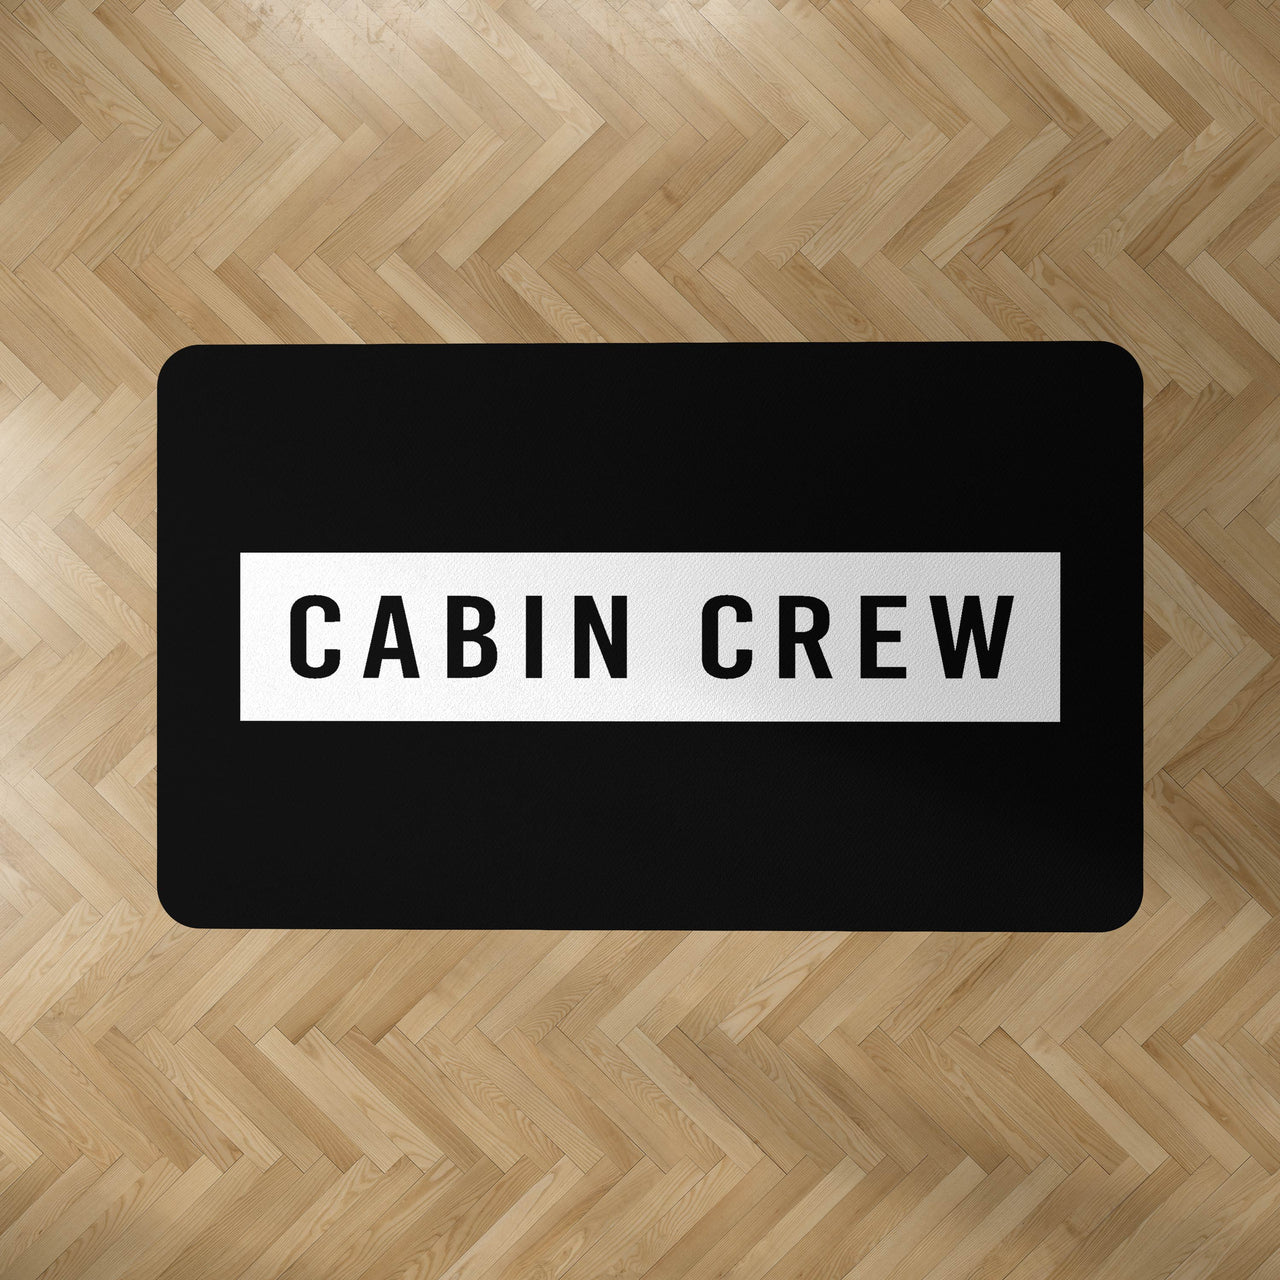 Cabin Crew Text Designed Carpet & Floor Mats